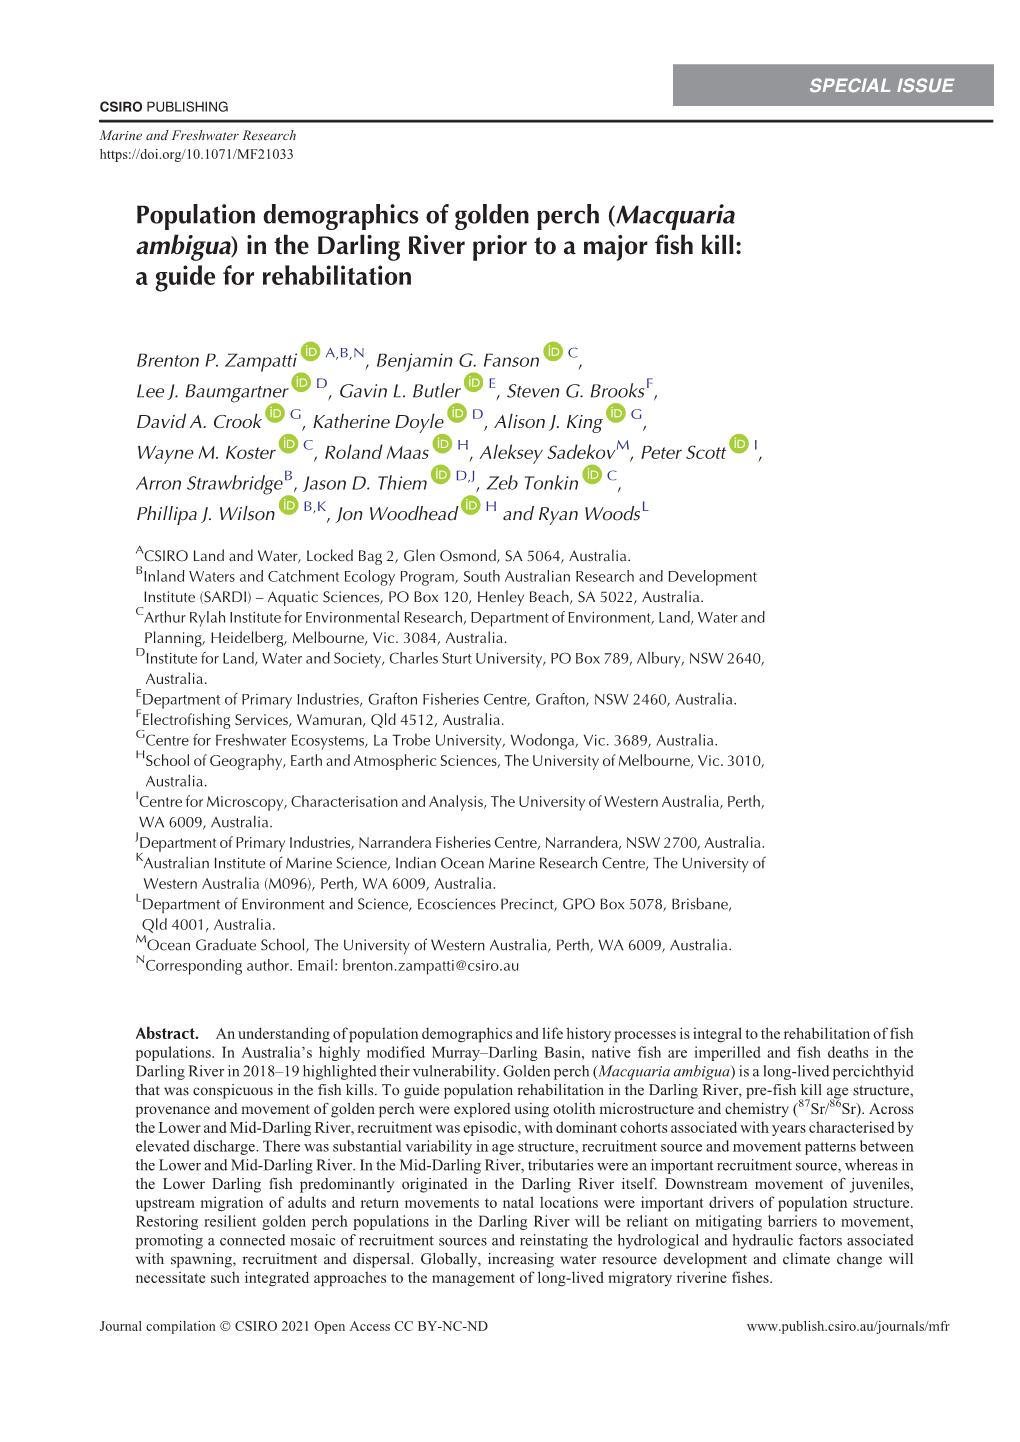 Population Demographics of Golden Perch (Macquaria Ambigua) in the Darling River Prior to a Major Fish Kill: a Guide for Rehabilitation